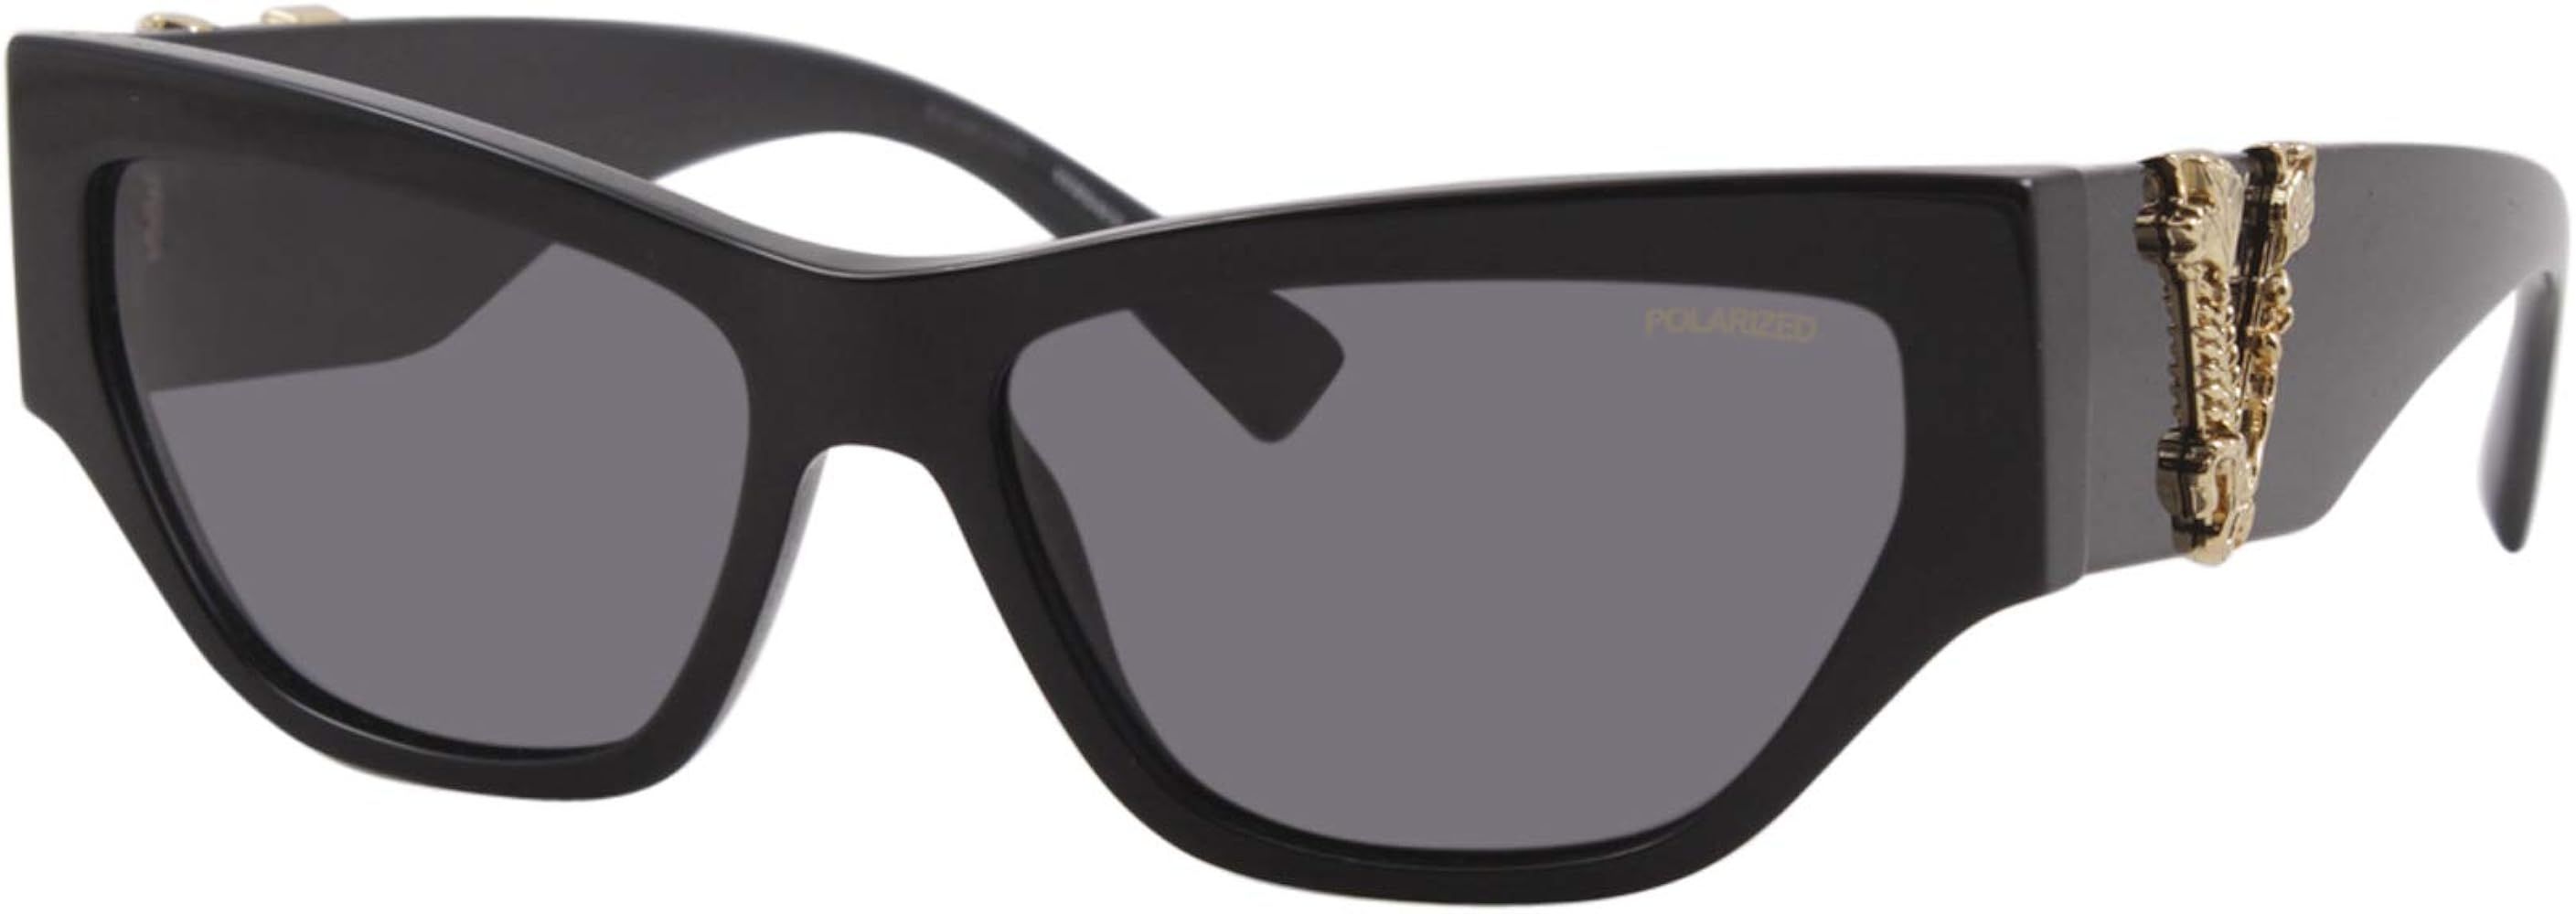 Versace Woman Sunglasses, Black Lenses Acetate Frame, 56mm | Amazon (US)